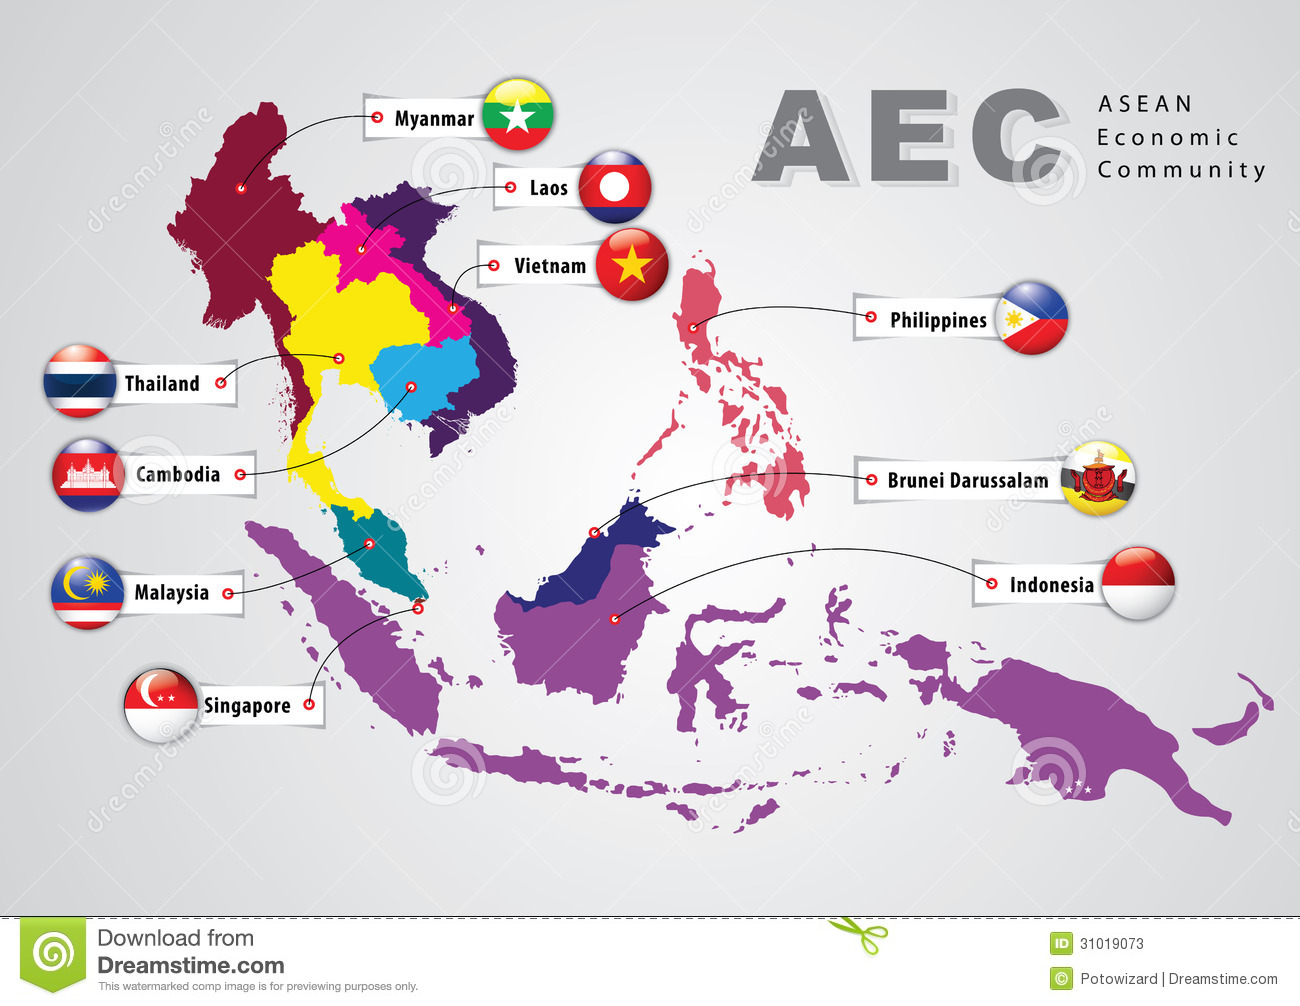 Formation of ASEAN Economic Community (AEC) and Vietnam’s participation